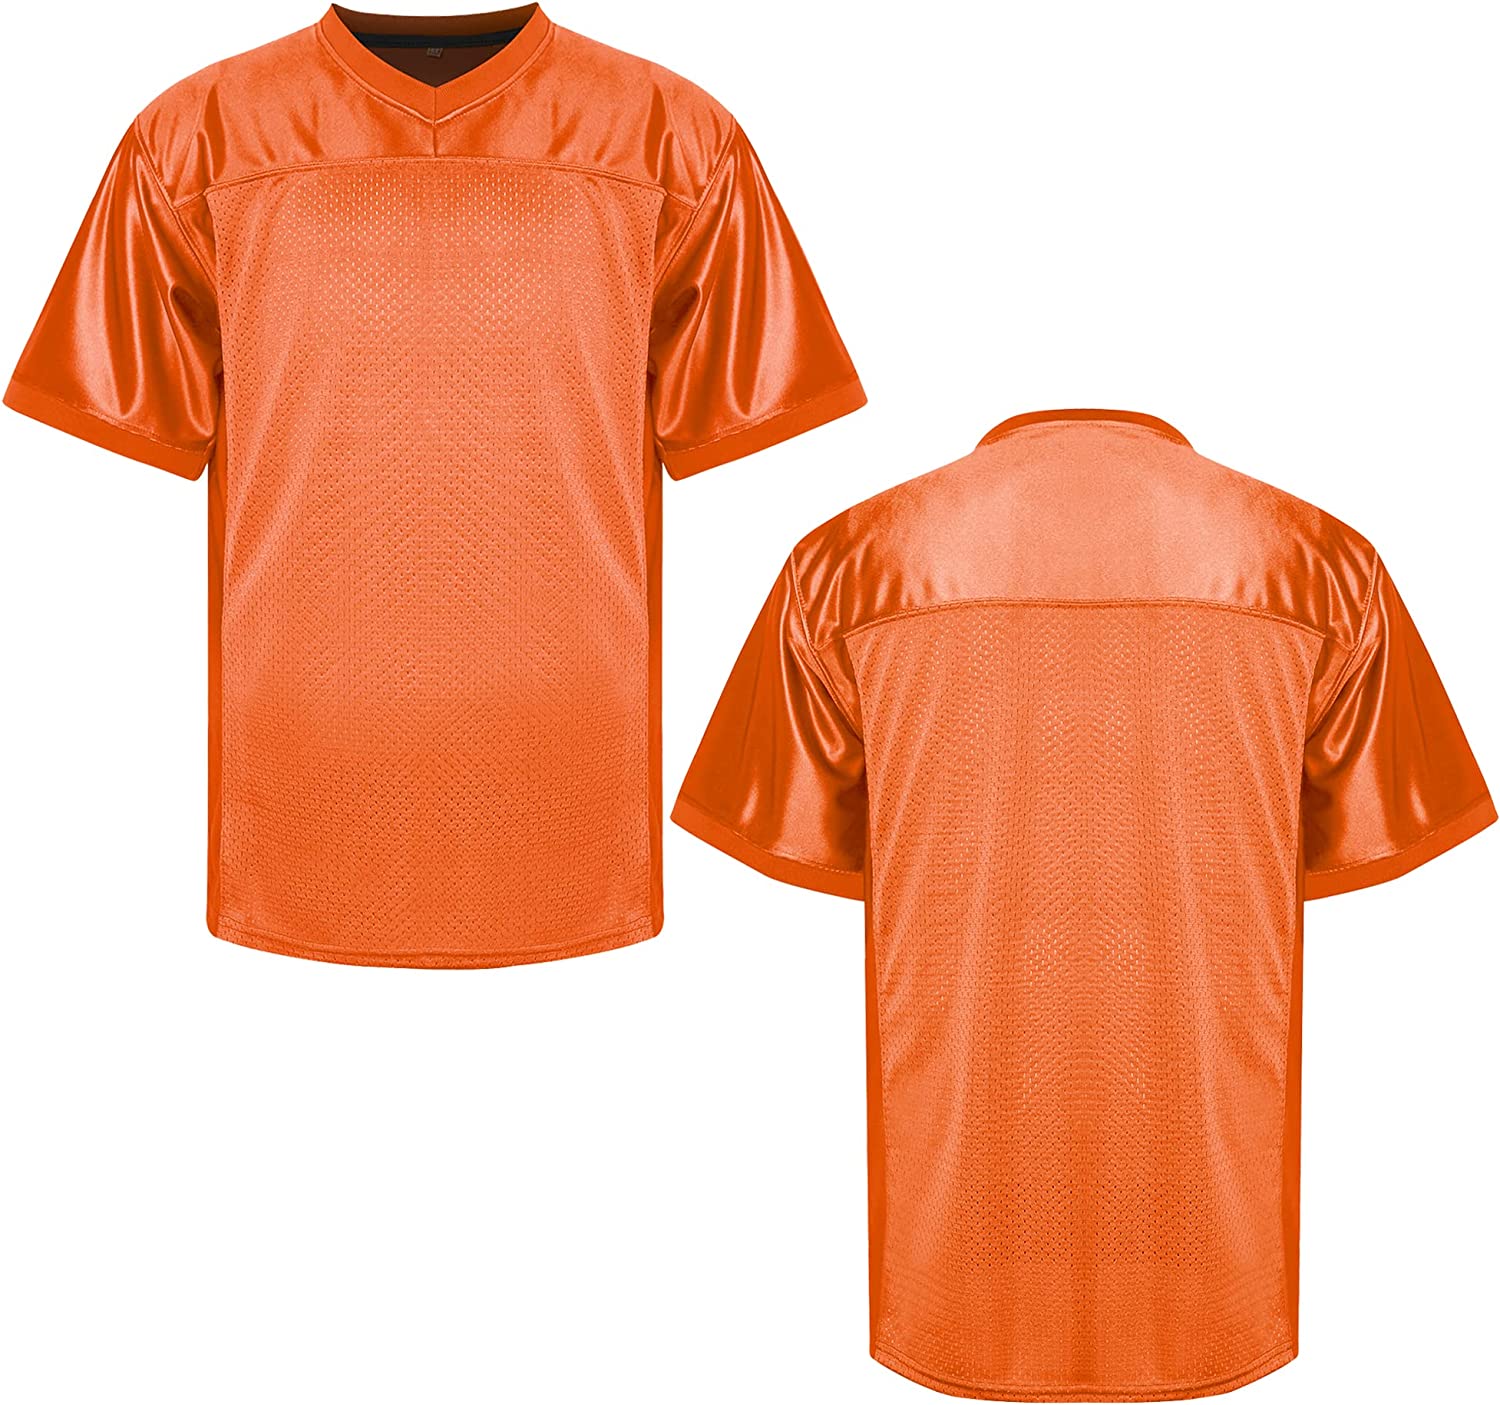  JKNAKN Blank Football Jerseys Mesh Athletic Football Shirt  Practice Sports Uniform Black White Jersey : Clothing, Shoes & Jewelry